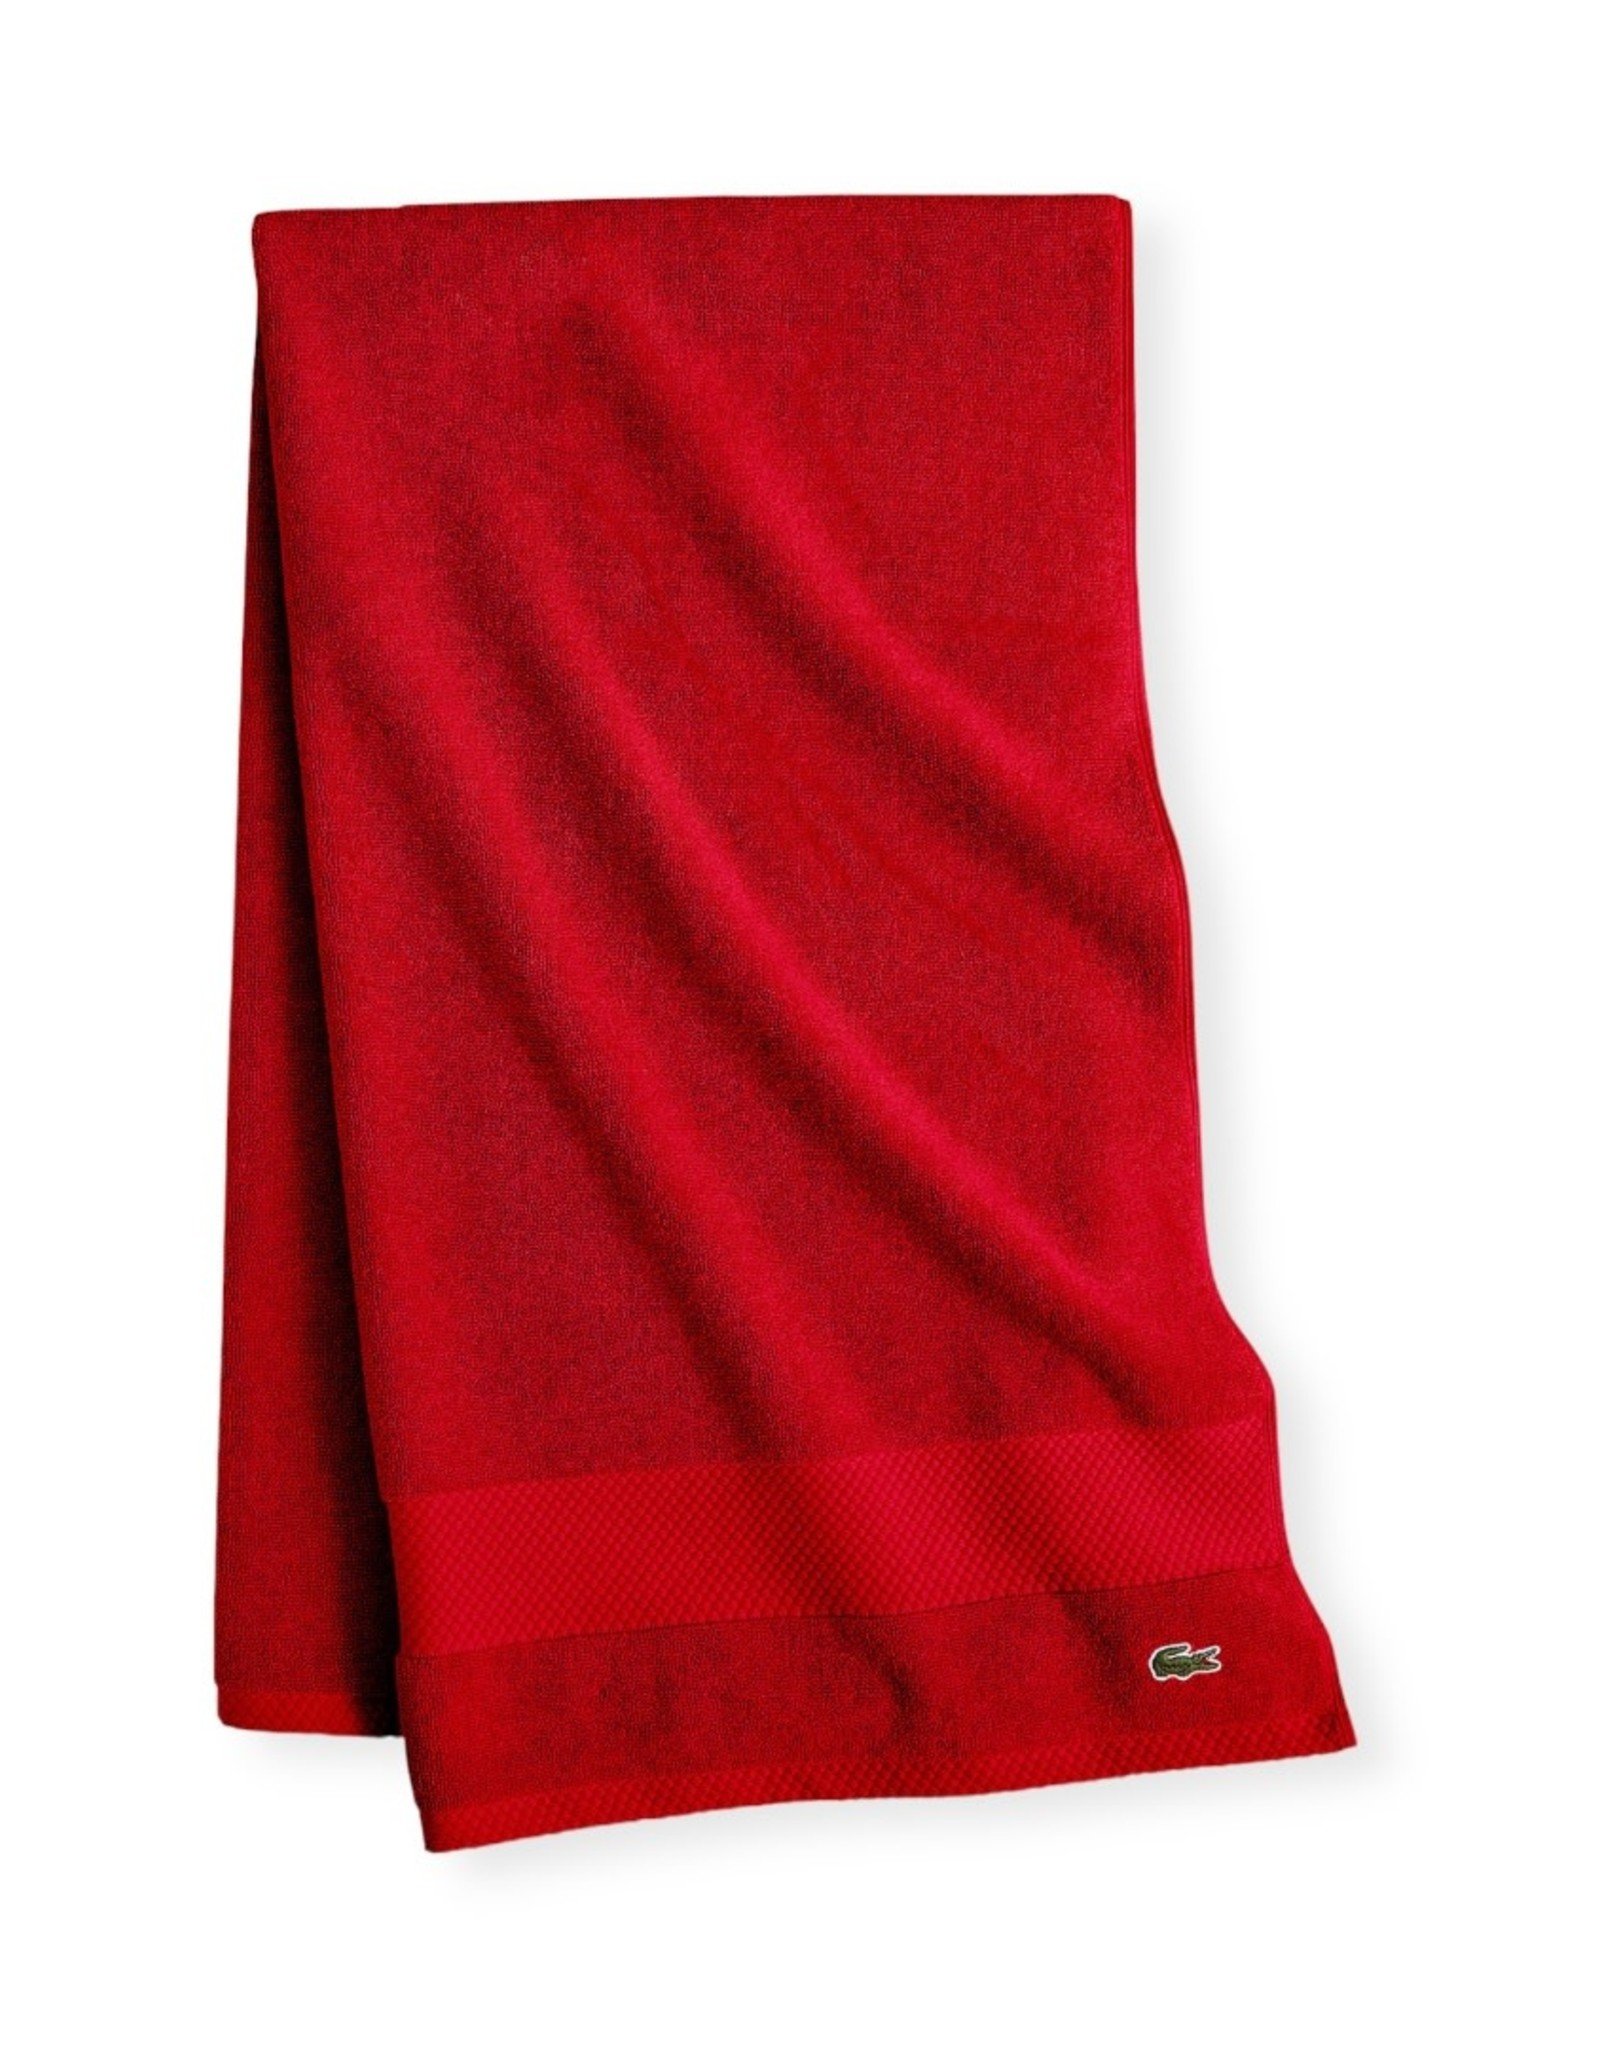 Lacoste Heritage Supima Cotton Bath Towel, Celestial, 30 x 54 Bath Towel  30x54 Celestial